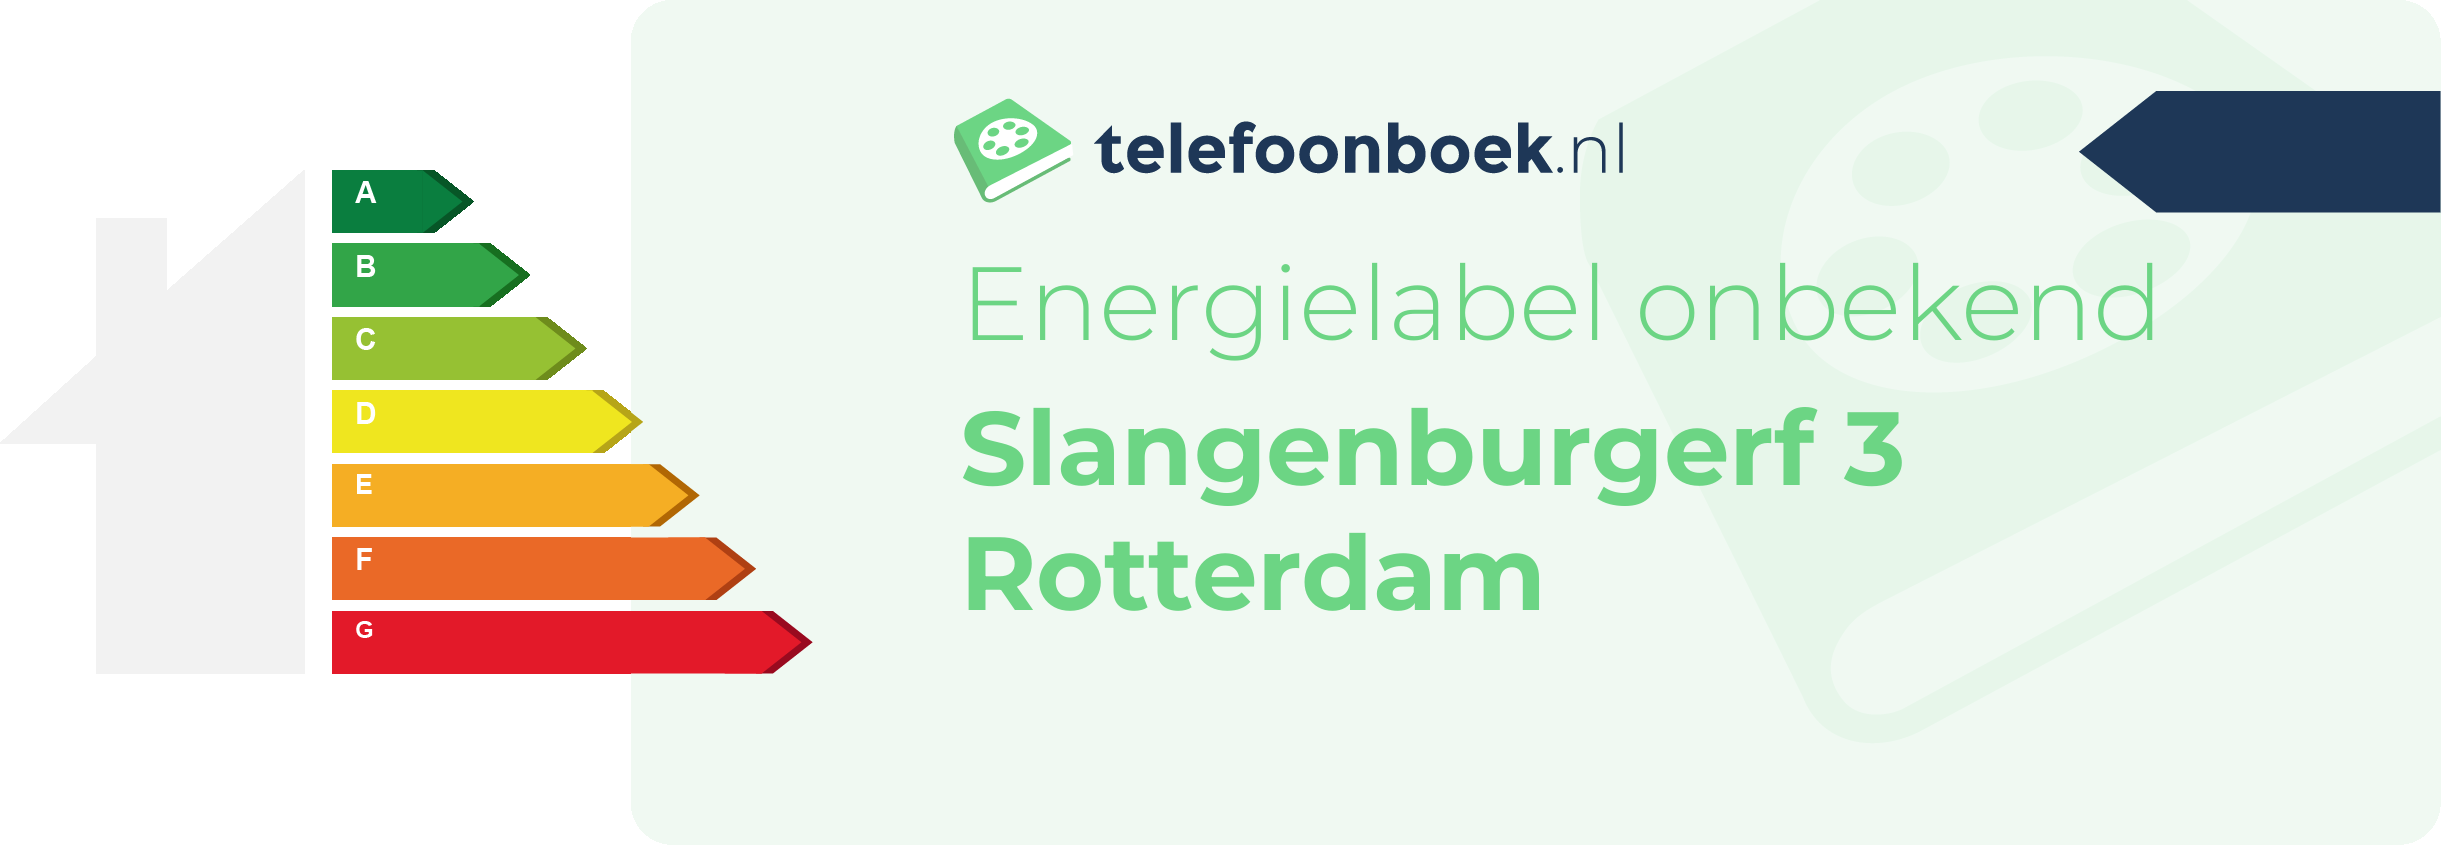 Energielabel Slangenburgerf 3 Rotterdam